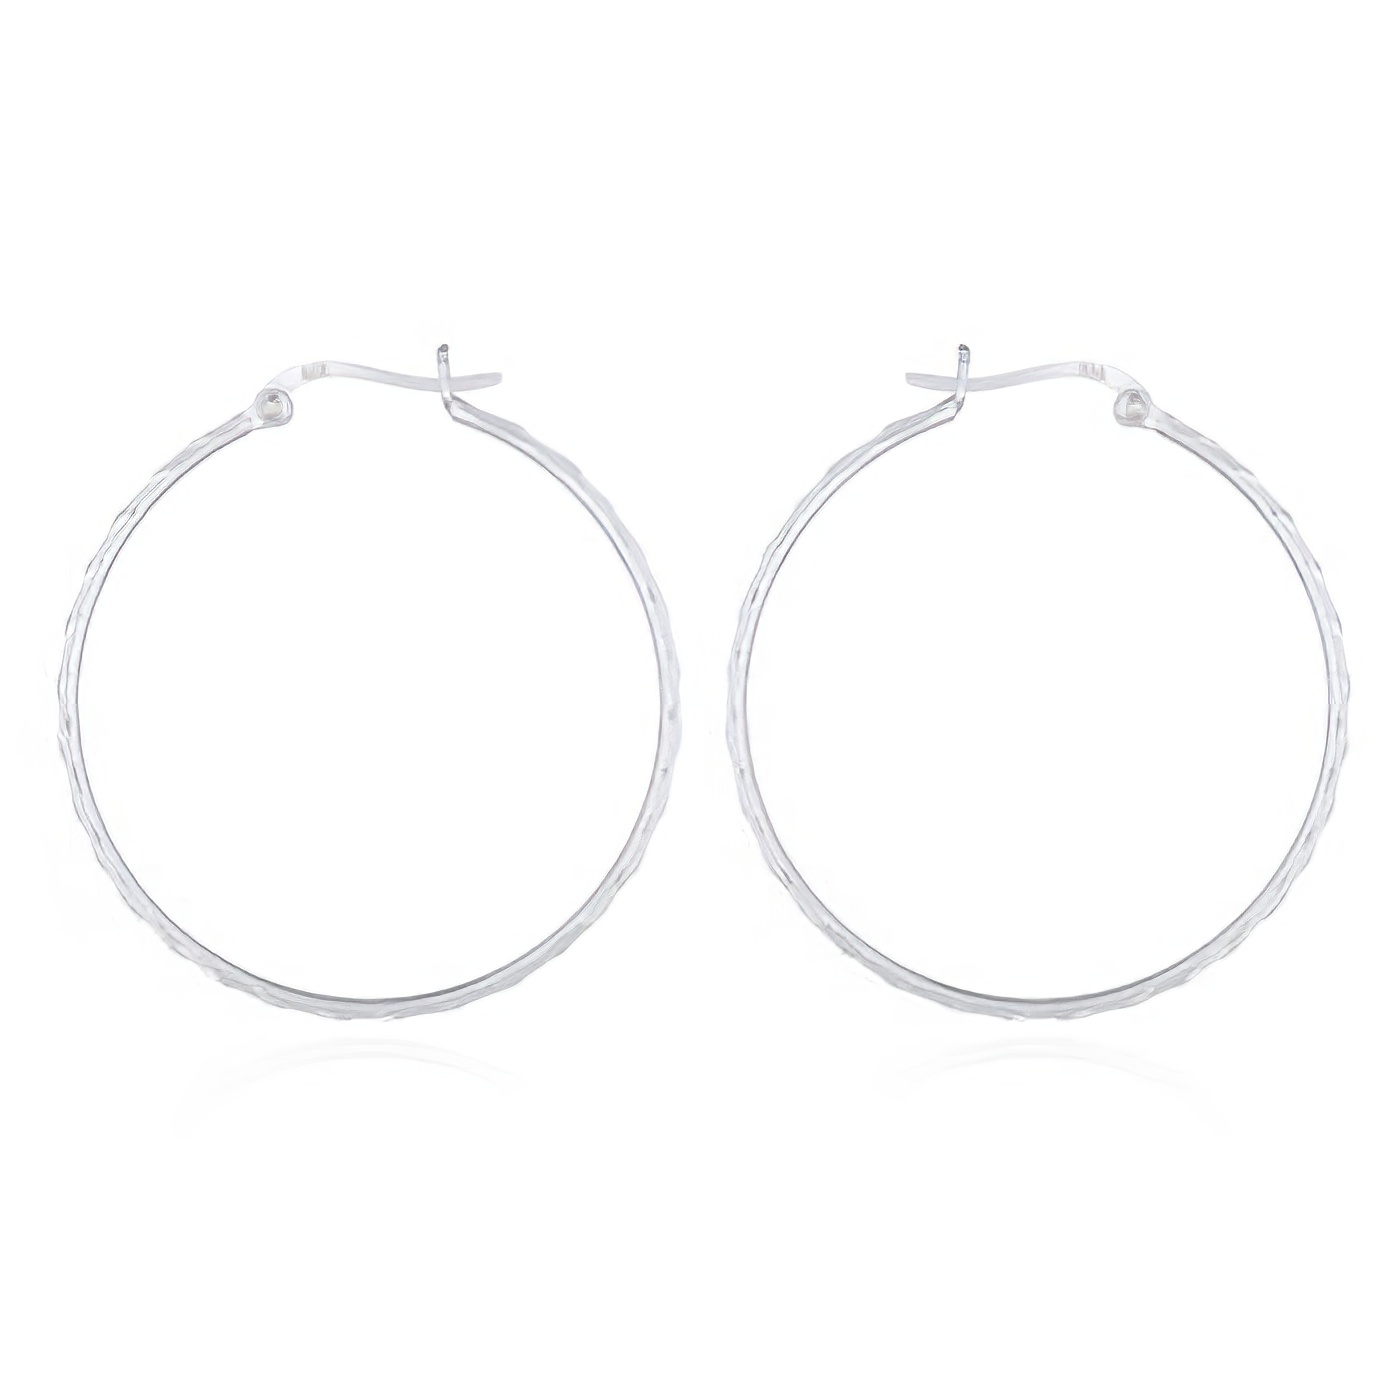 40 mm Faceted Silver Wire Hoop Earrings by BeYindi 